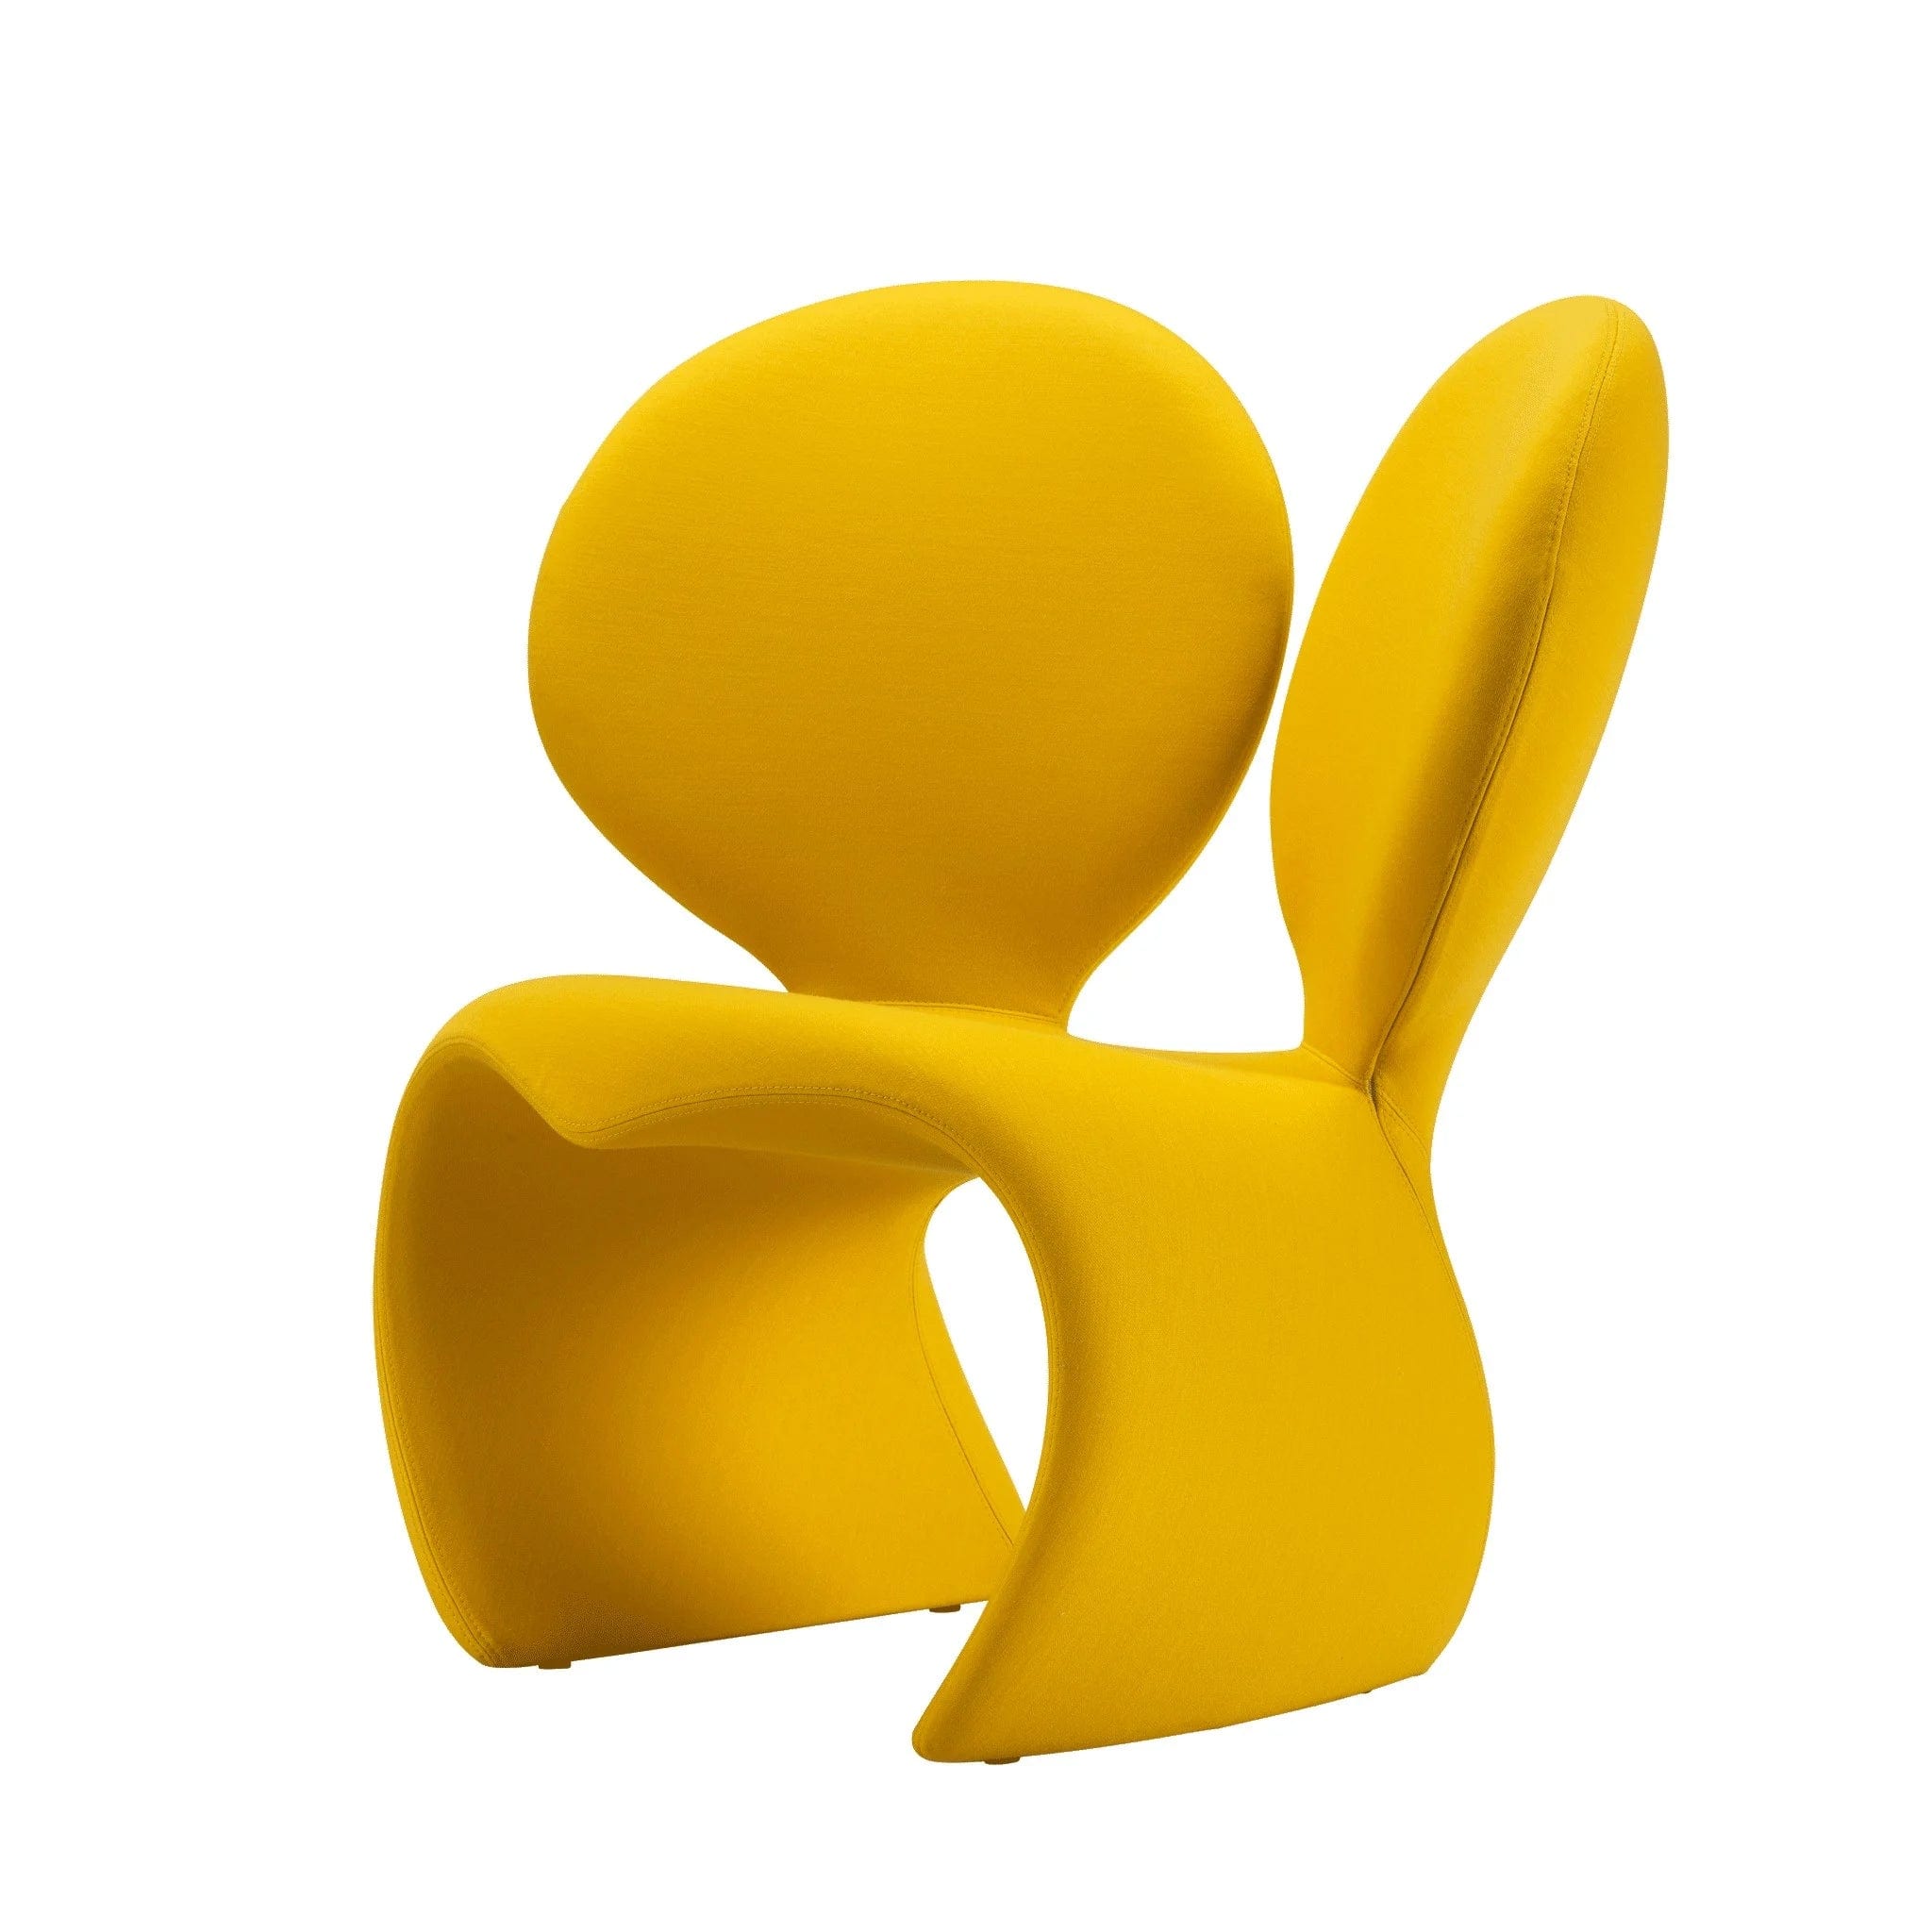 Fotel z tkaniną DON'T F**K WITH THE MOUSE żółty Qeeboo    Eye on Design